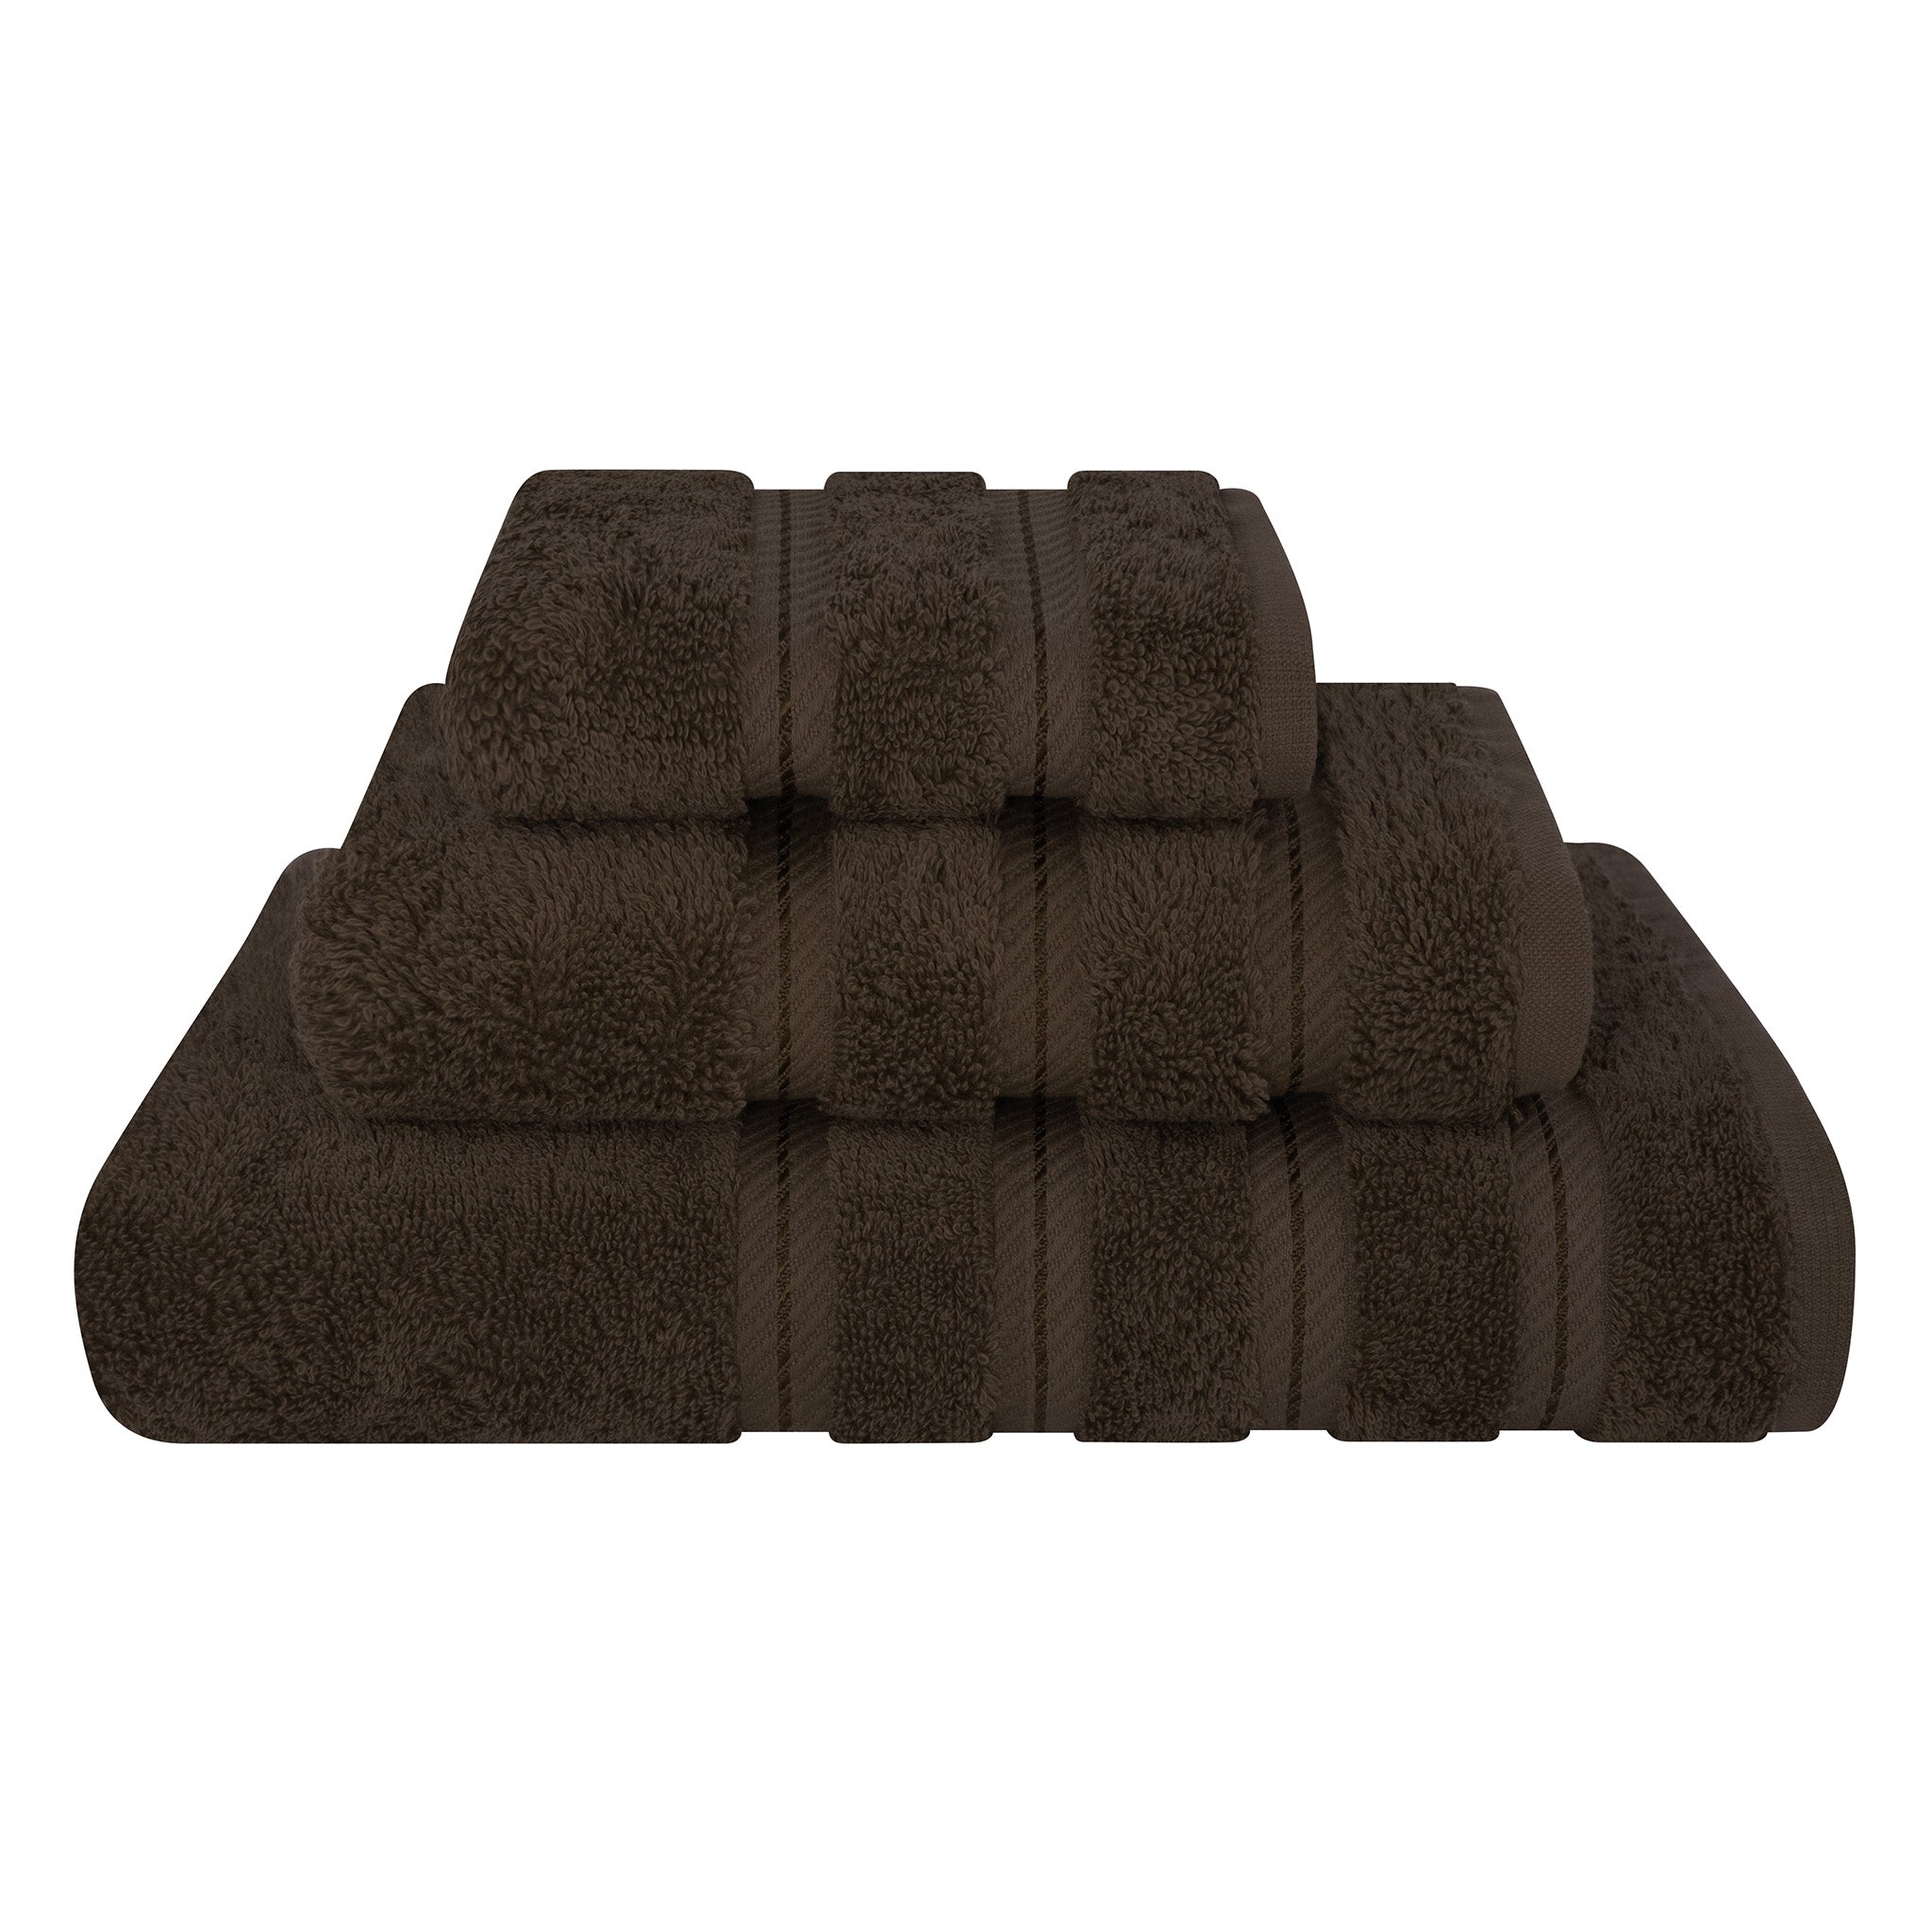 American Soft Linen 3 Piece Luxury Hotel Towel Set 20 set case pack chocolate-brown-1